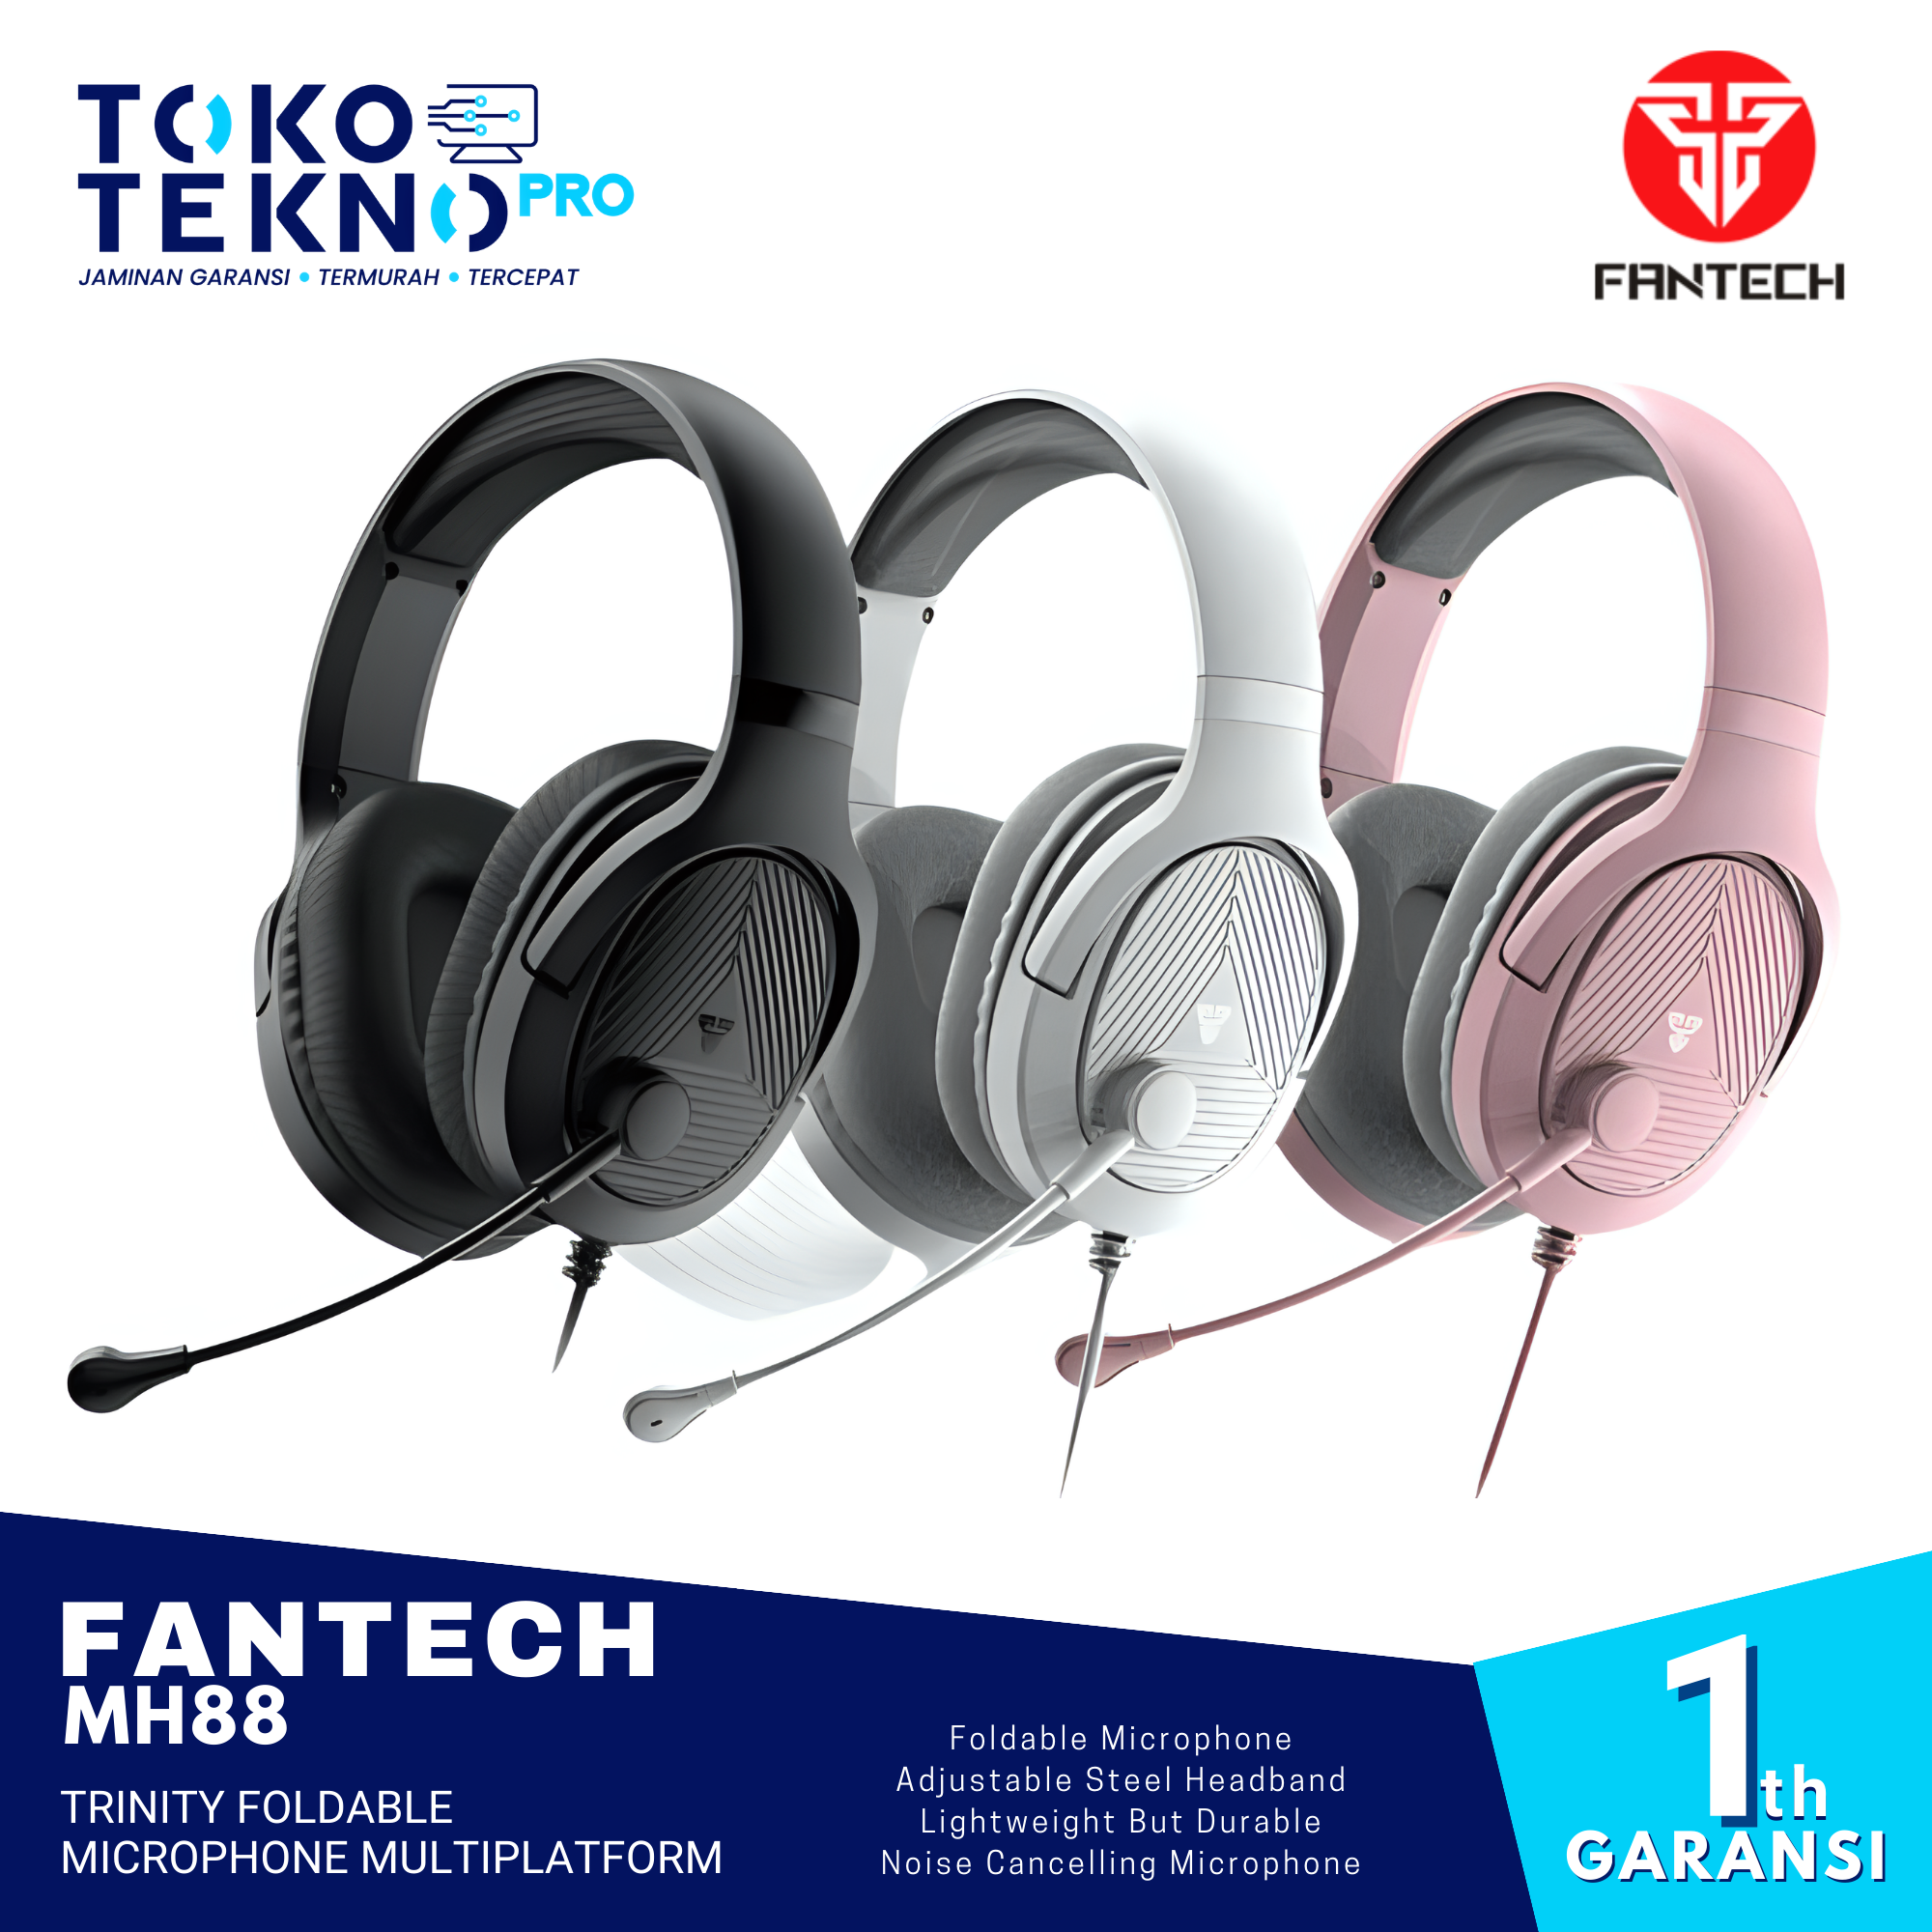 Fantech MH88 Trinity Foldable Microphone Multiplatform Headset